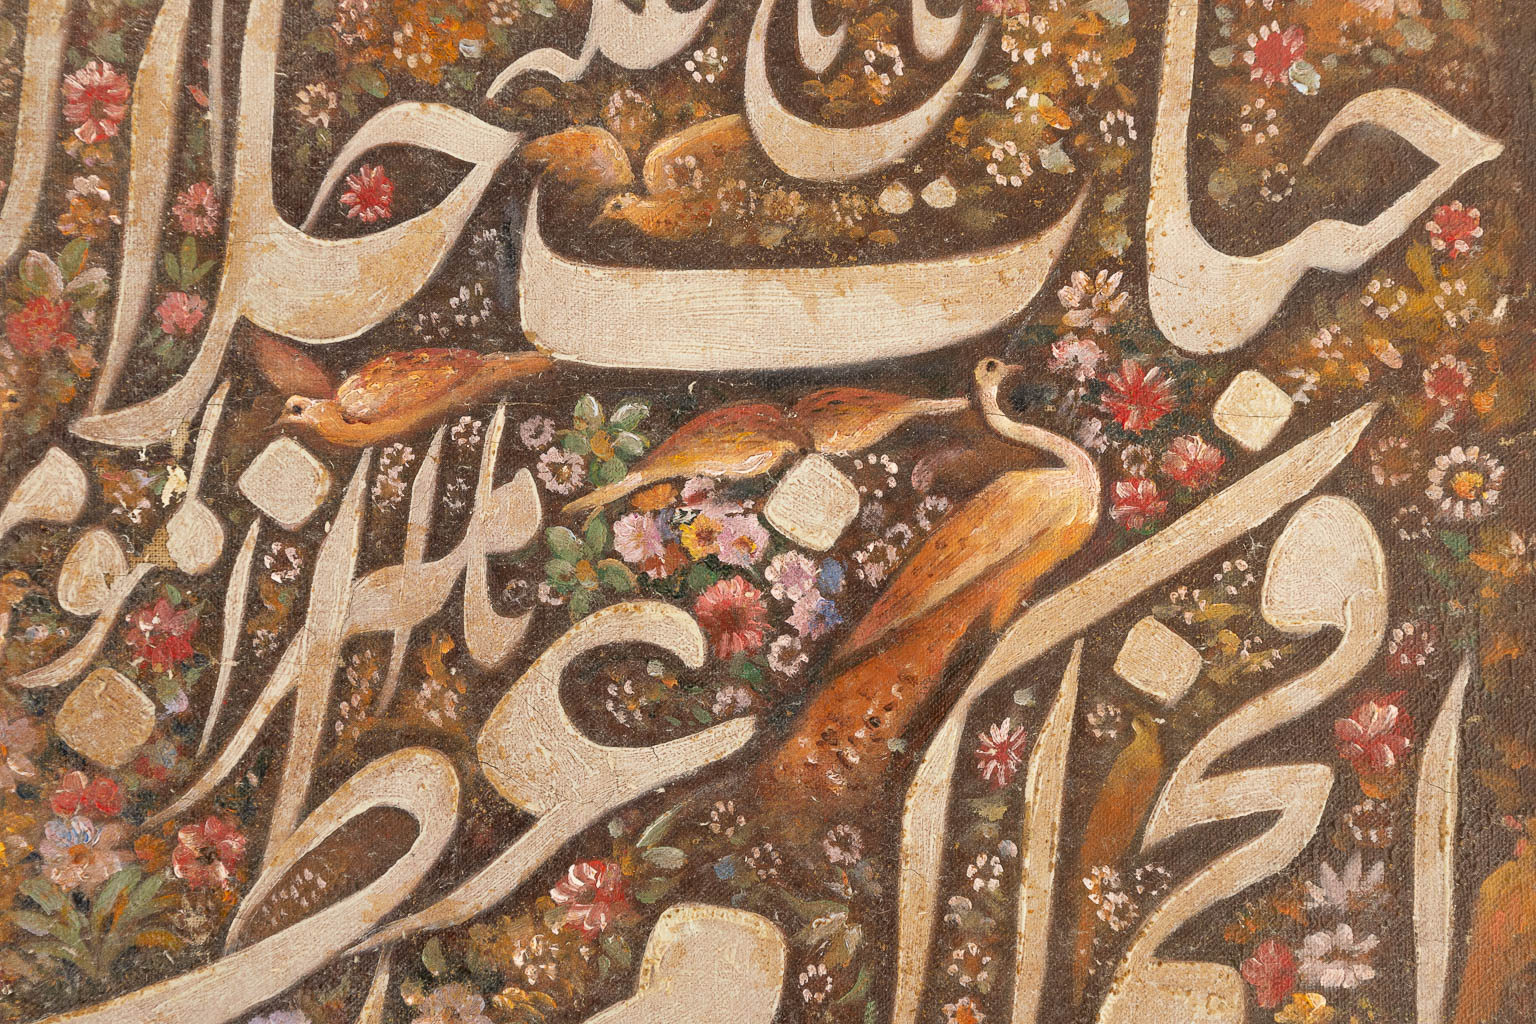 Naqash Bashi, Jalairi, A Persian calligraphic oil painting. Qajar era. (W:60 x H:34 cm)